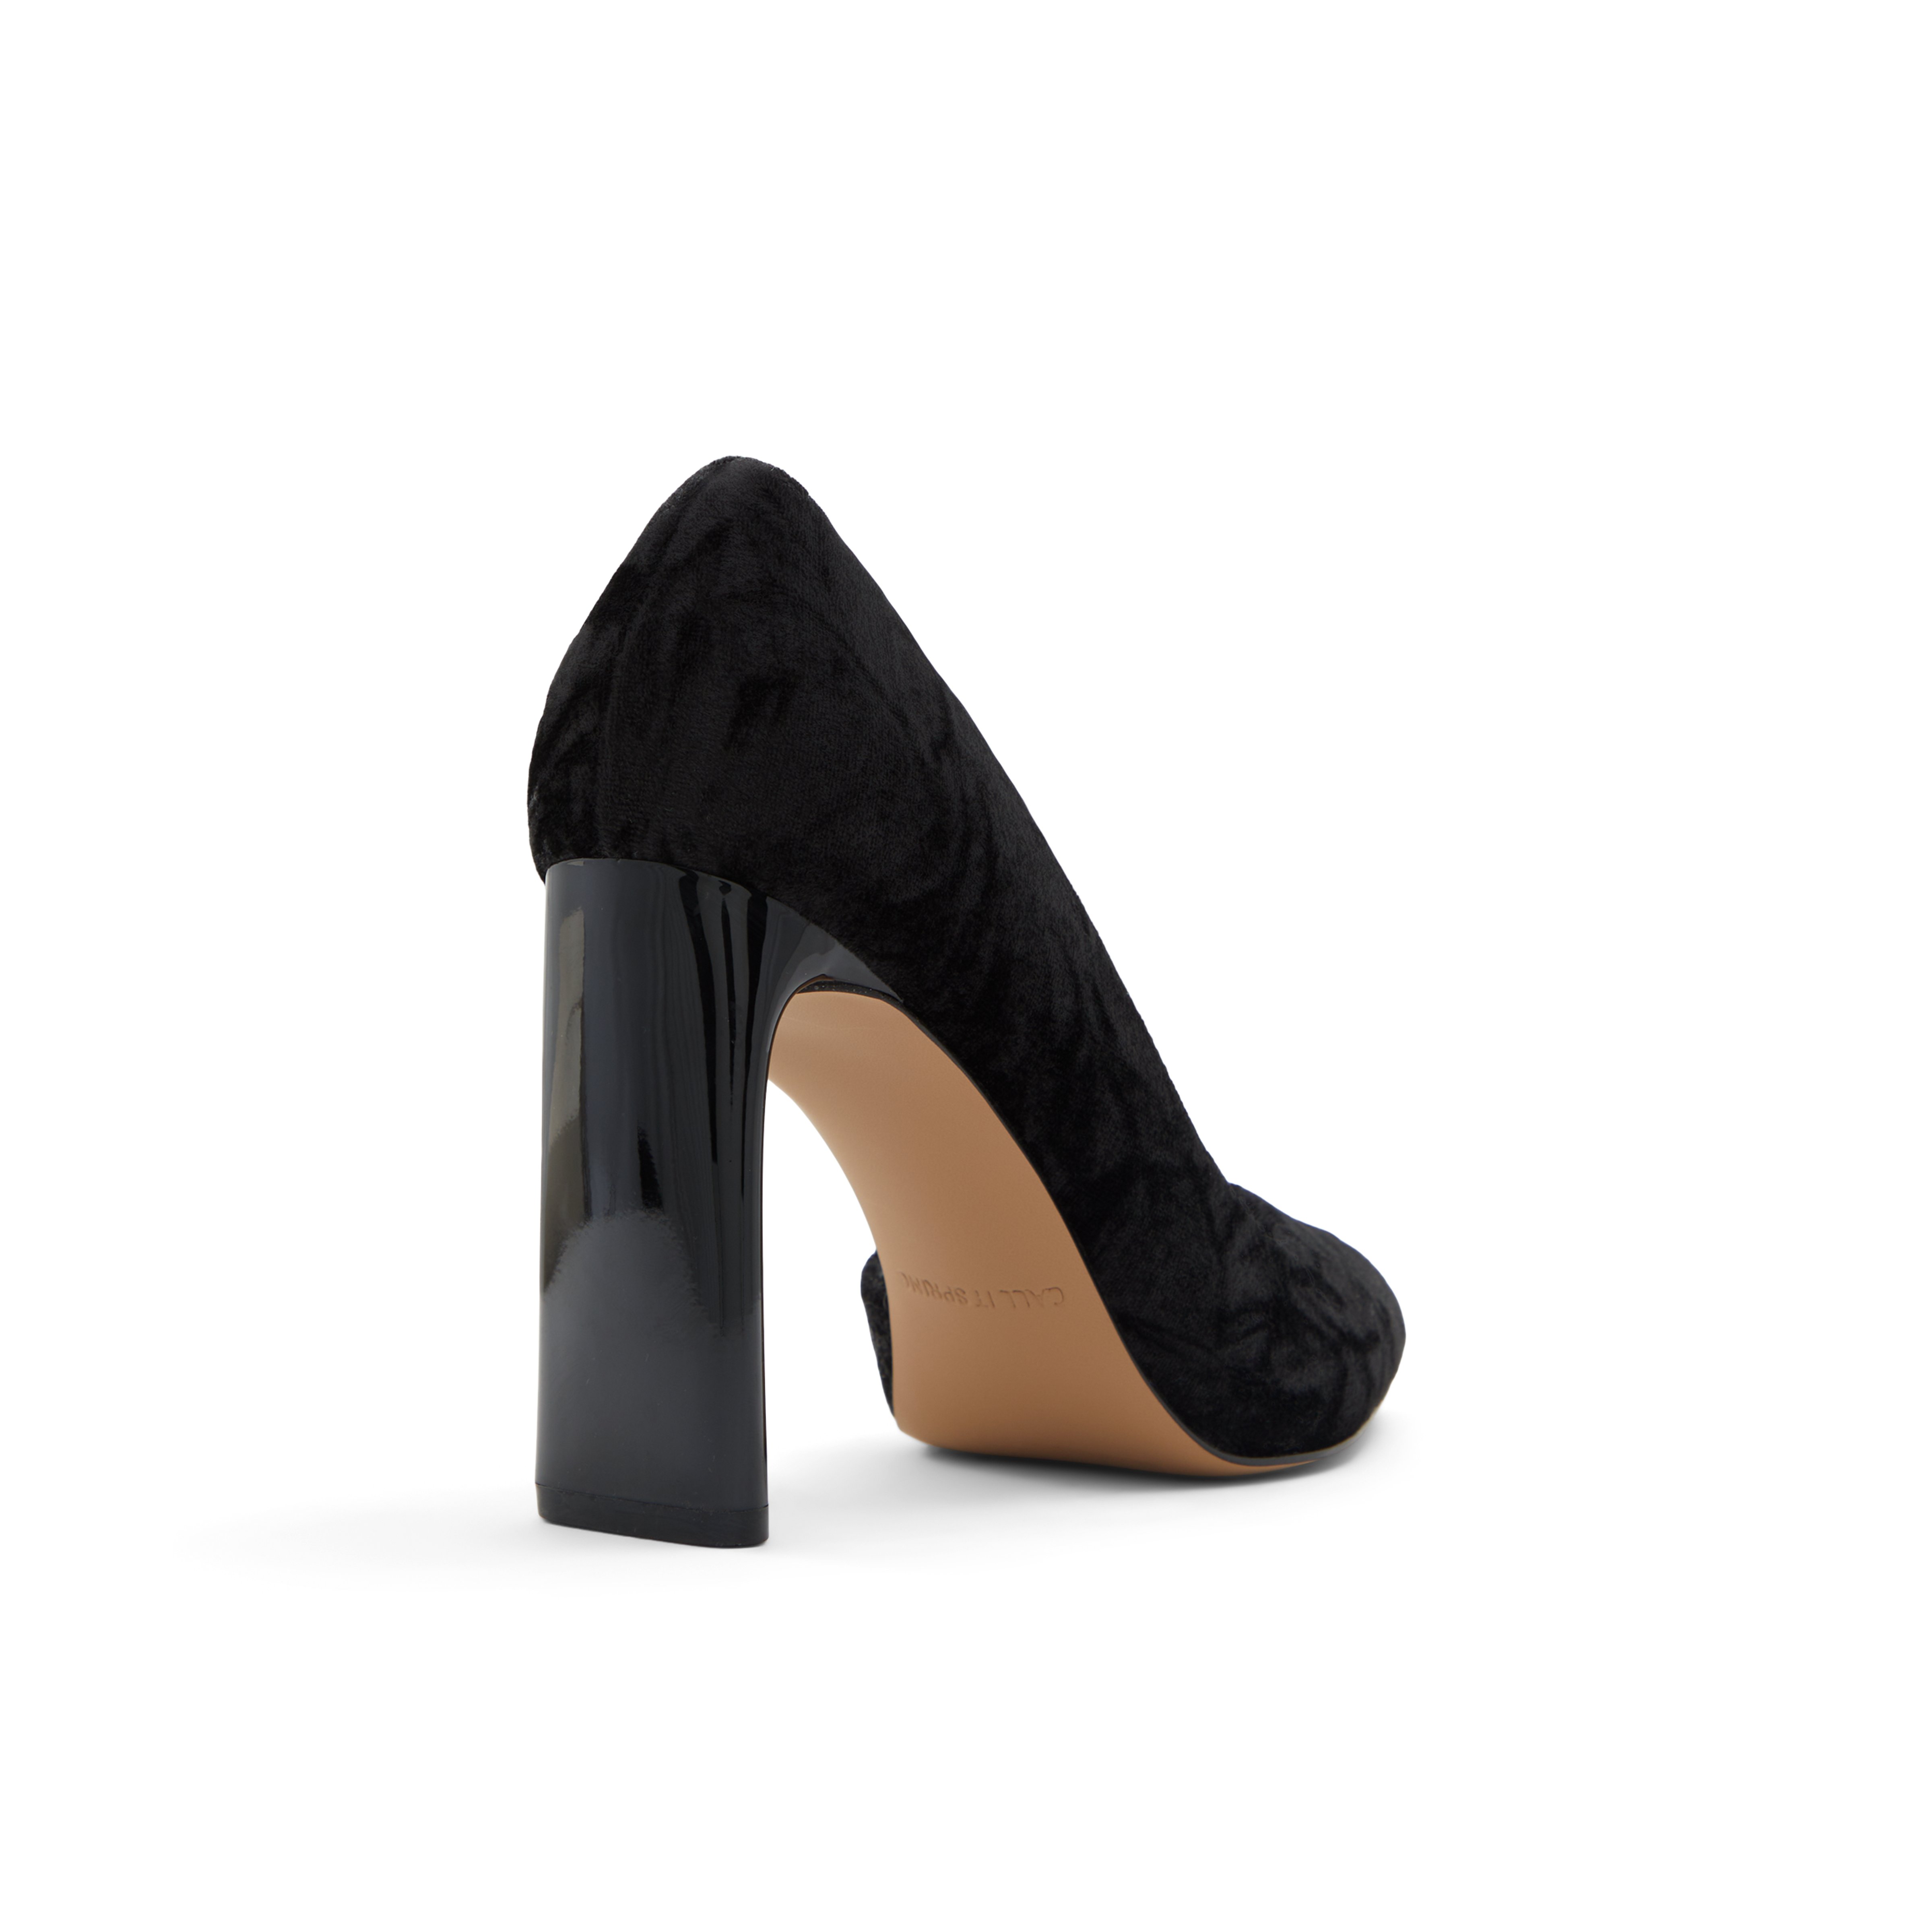 Kimberli High heels - Thin block heel